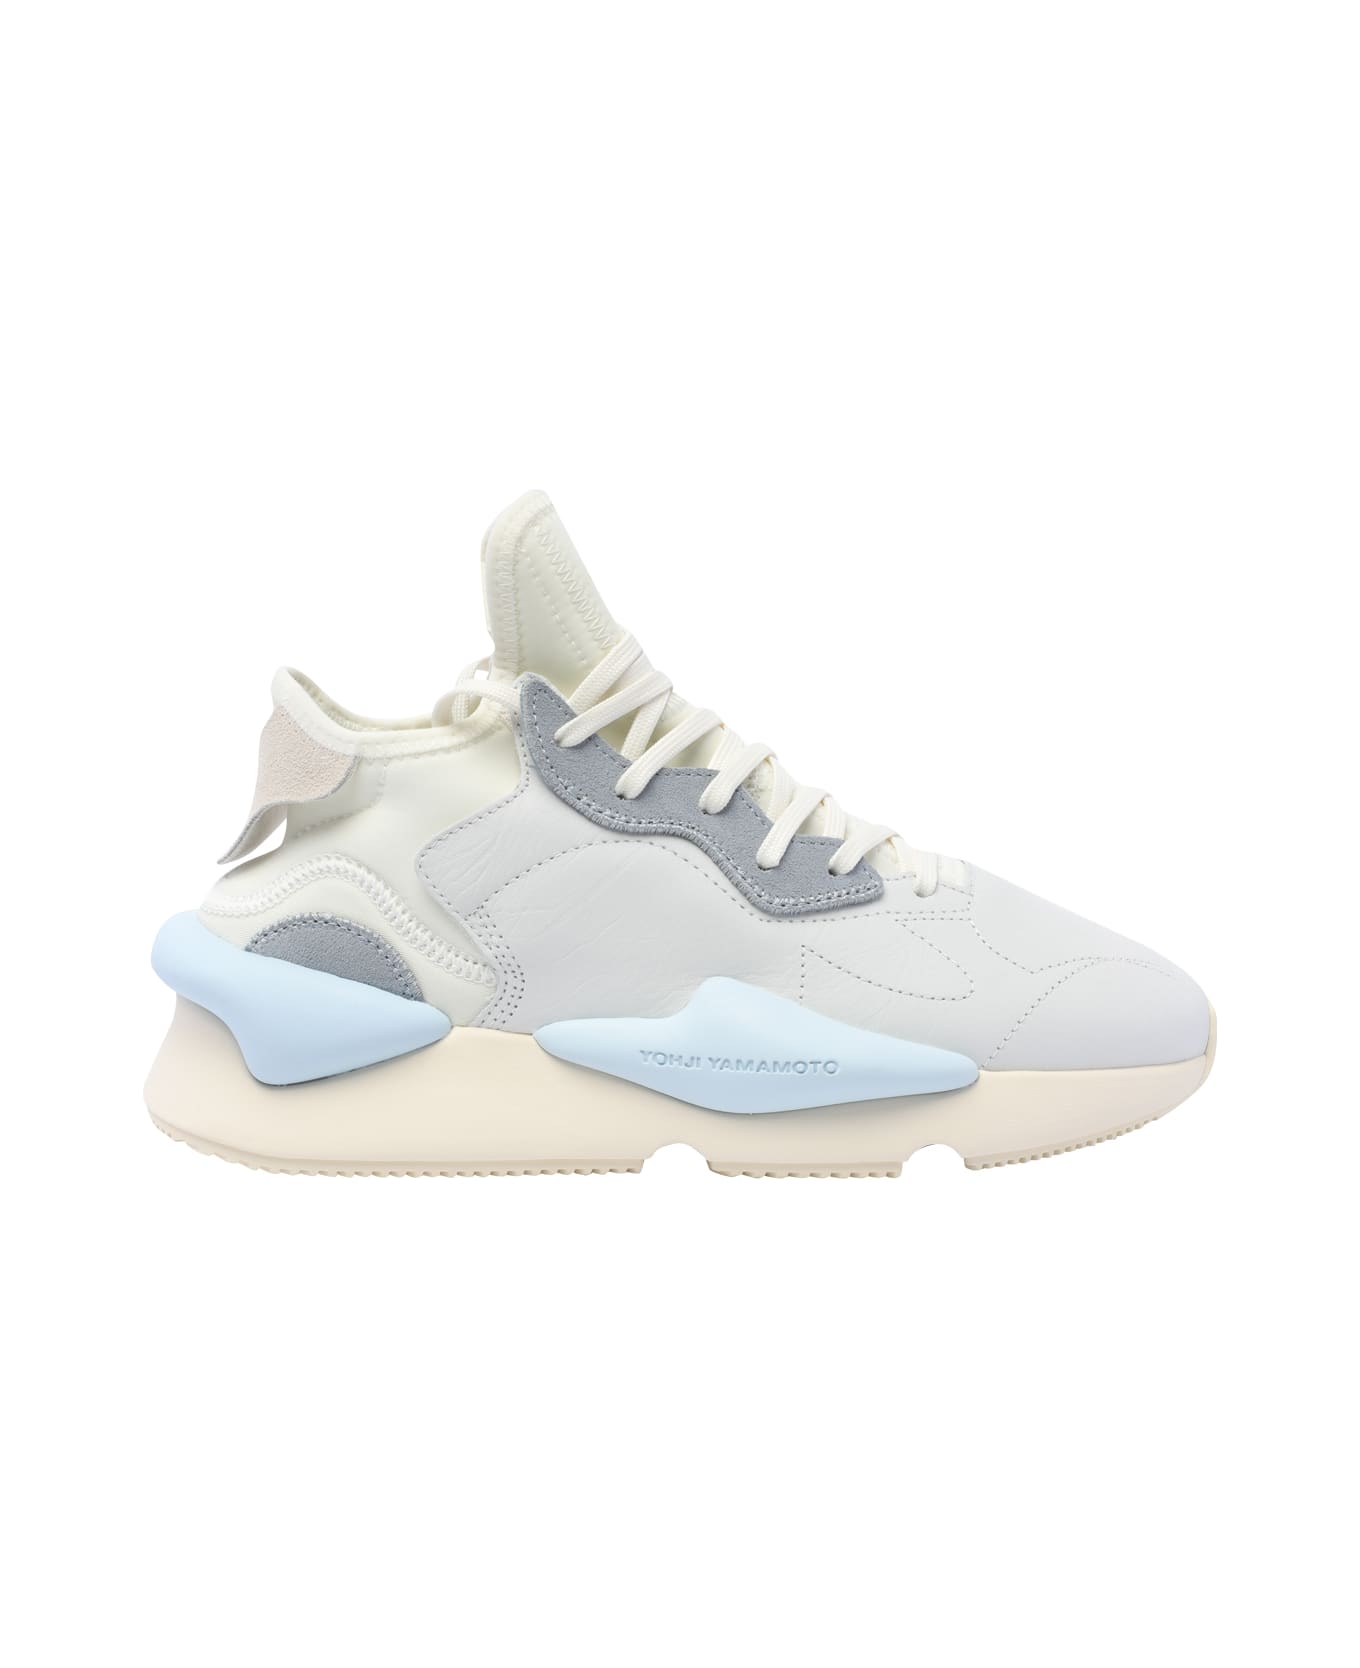 Y-3 Kaiwa Sneakers - GREY WHITE LIGHT BLUE